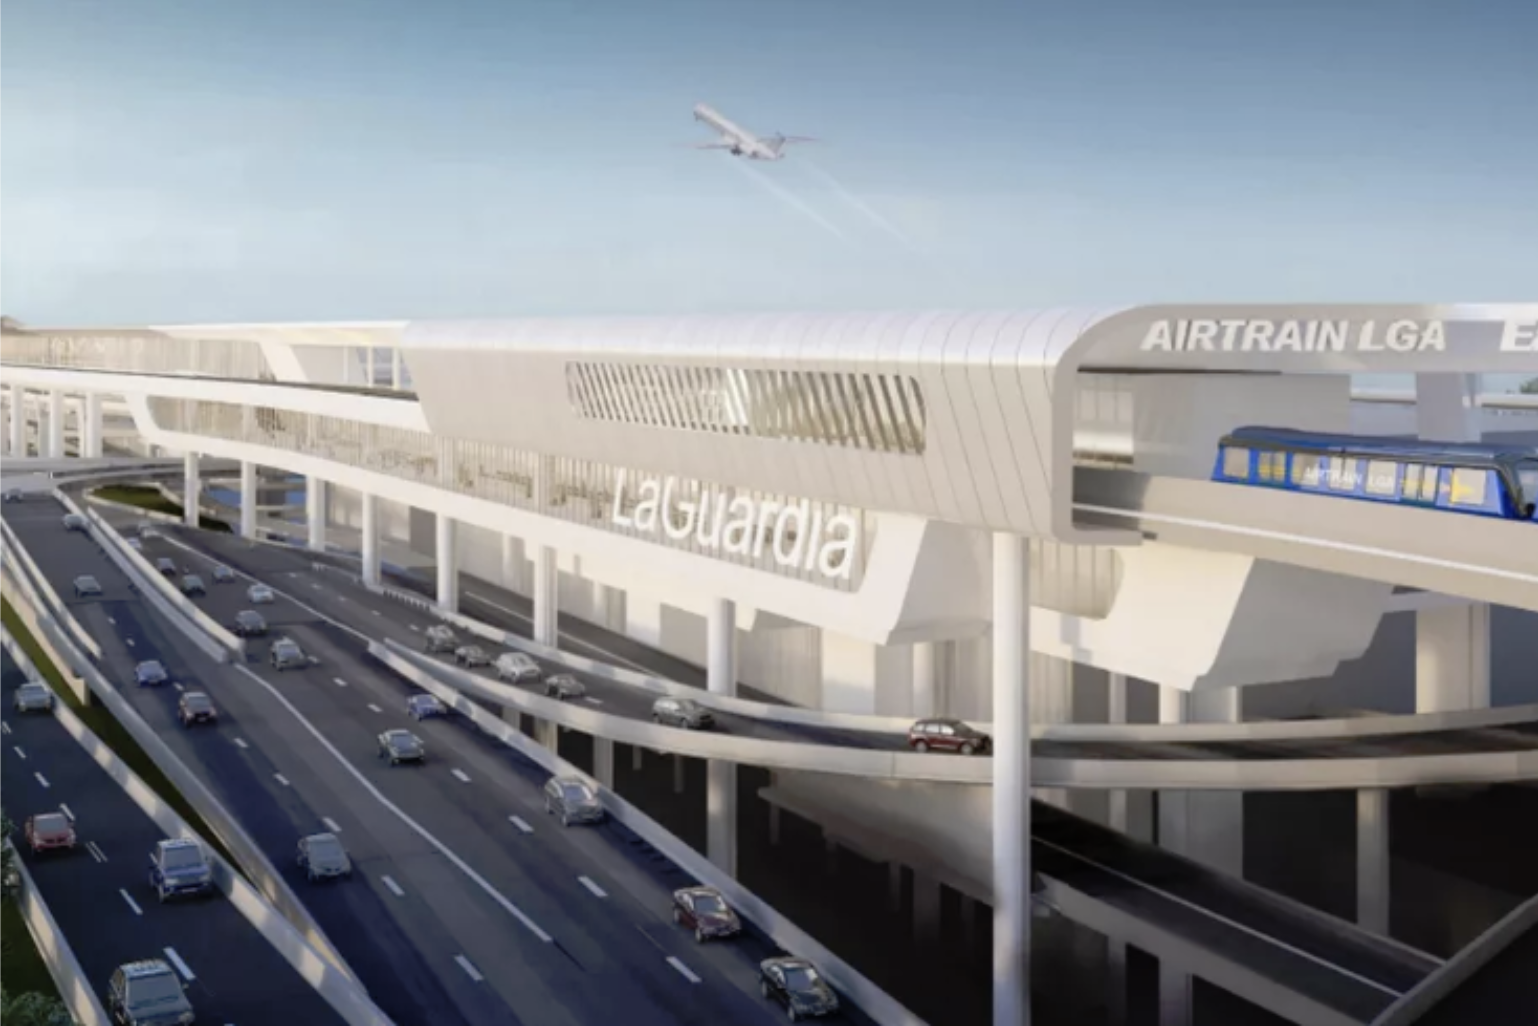 Laguardia Calendar 2022 Laguardia Airport Train, At $345,900, Is Called The World's Costliest -  Bloomberg